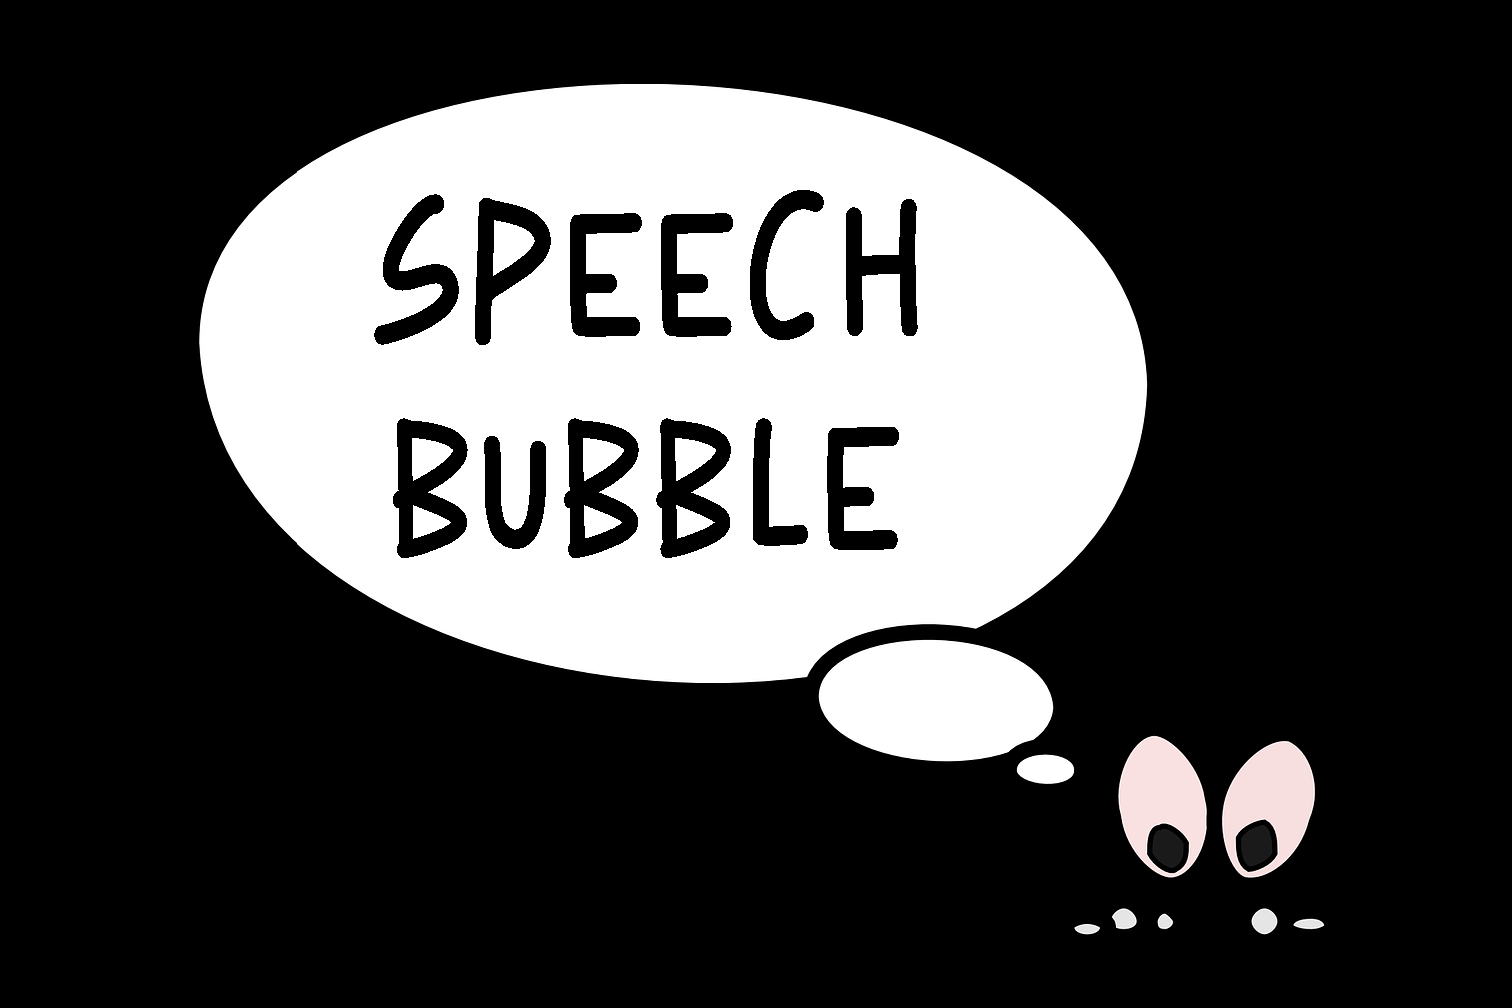 K26 Speech Bubble Font Poster 1